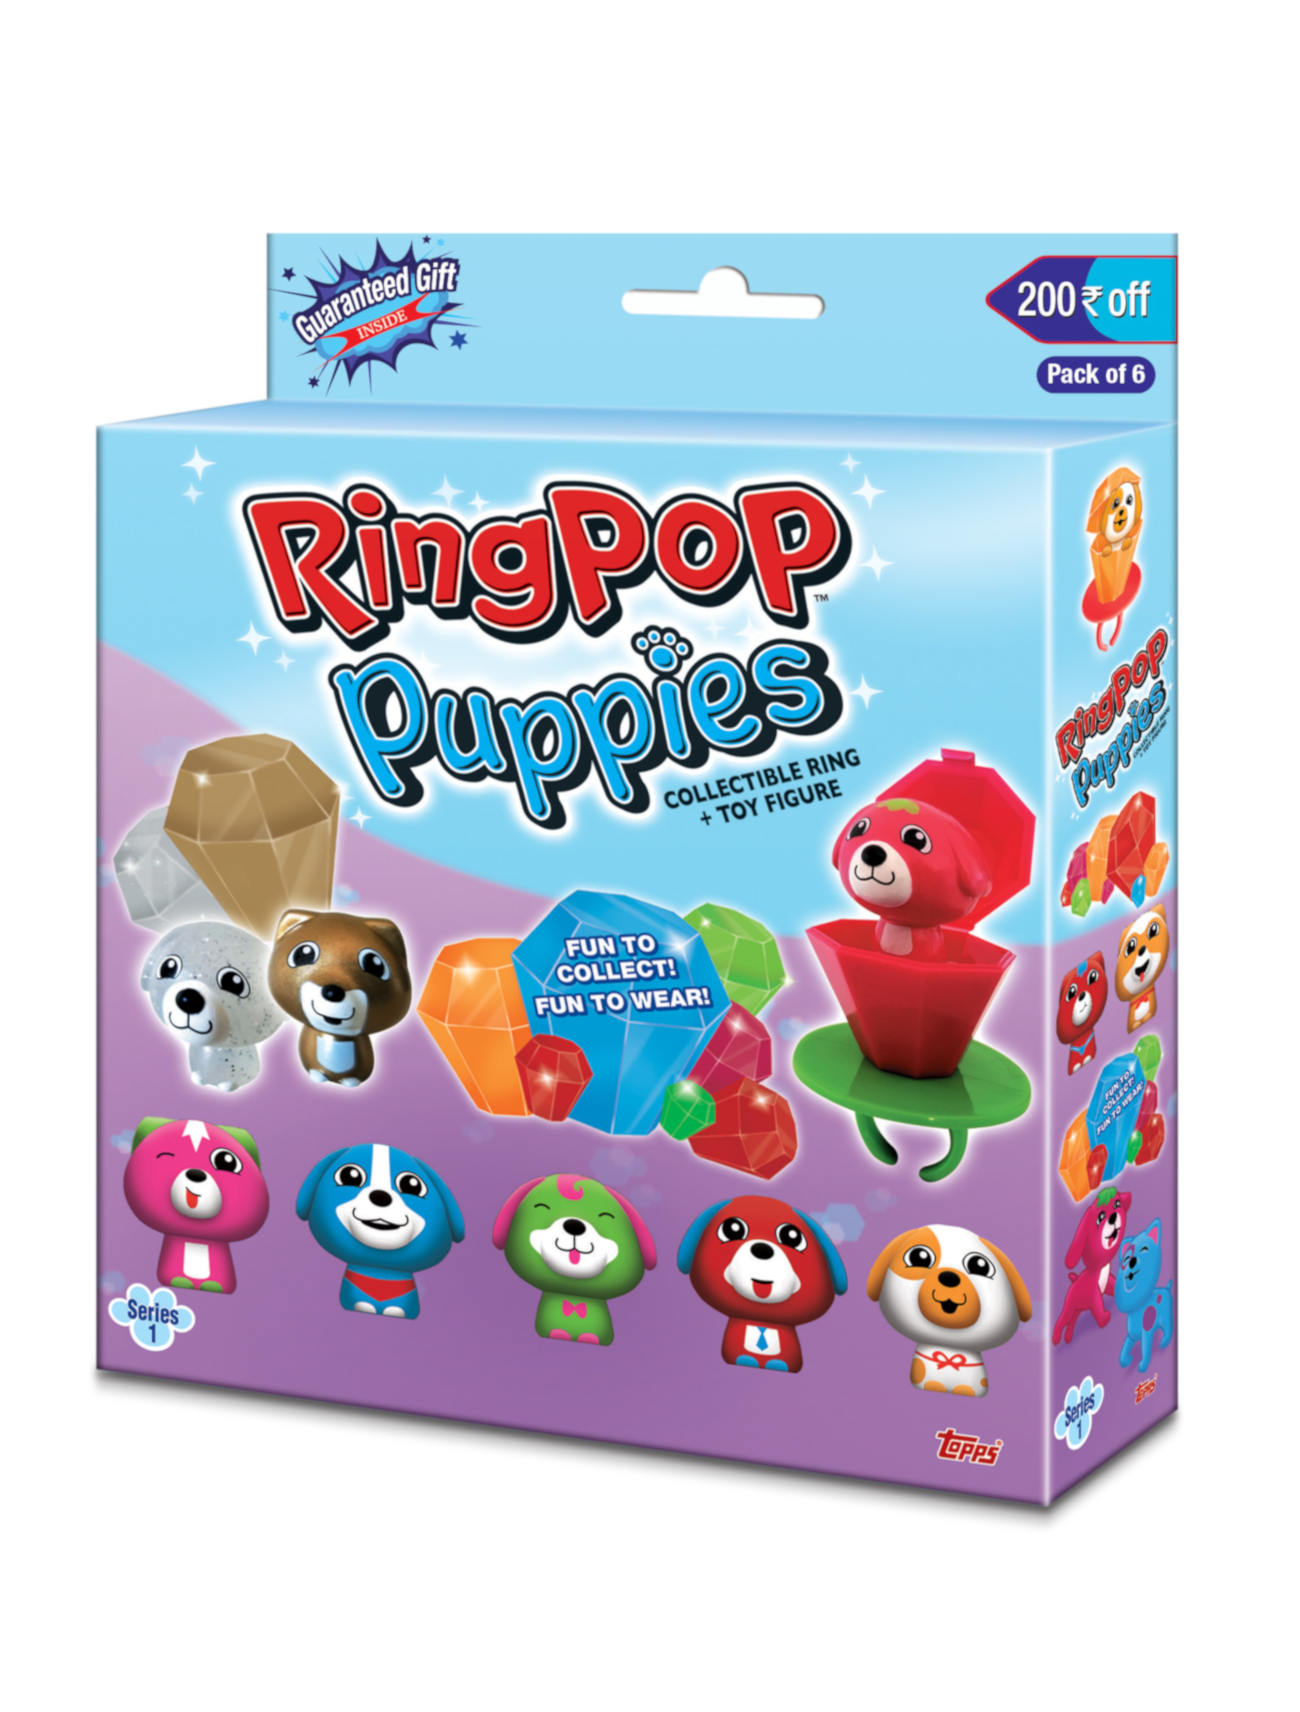 www.amazon.co.uk: Topps: Ring Pop Puppies